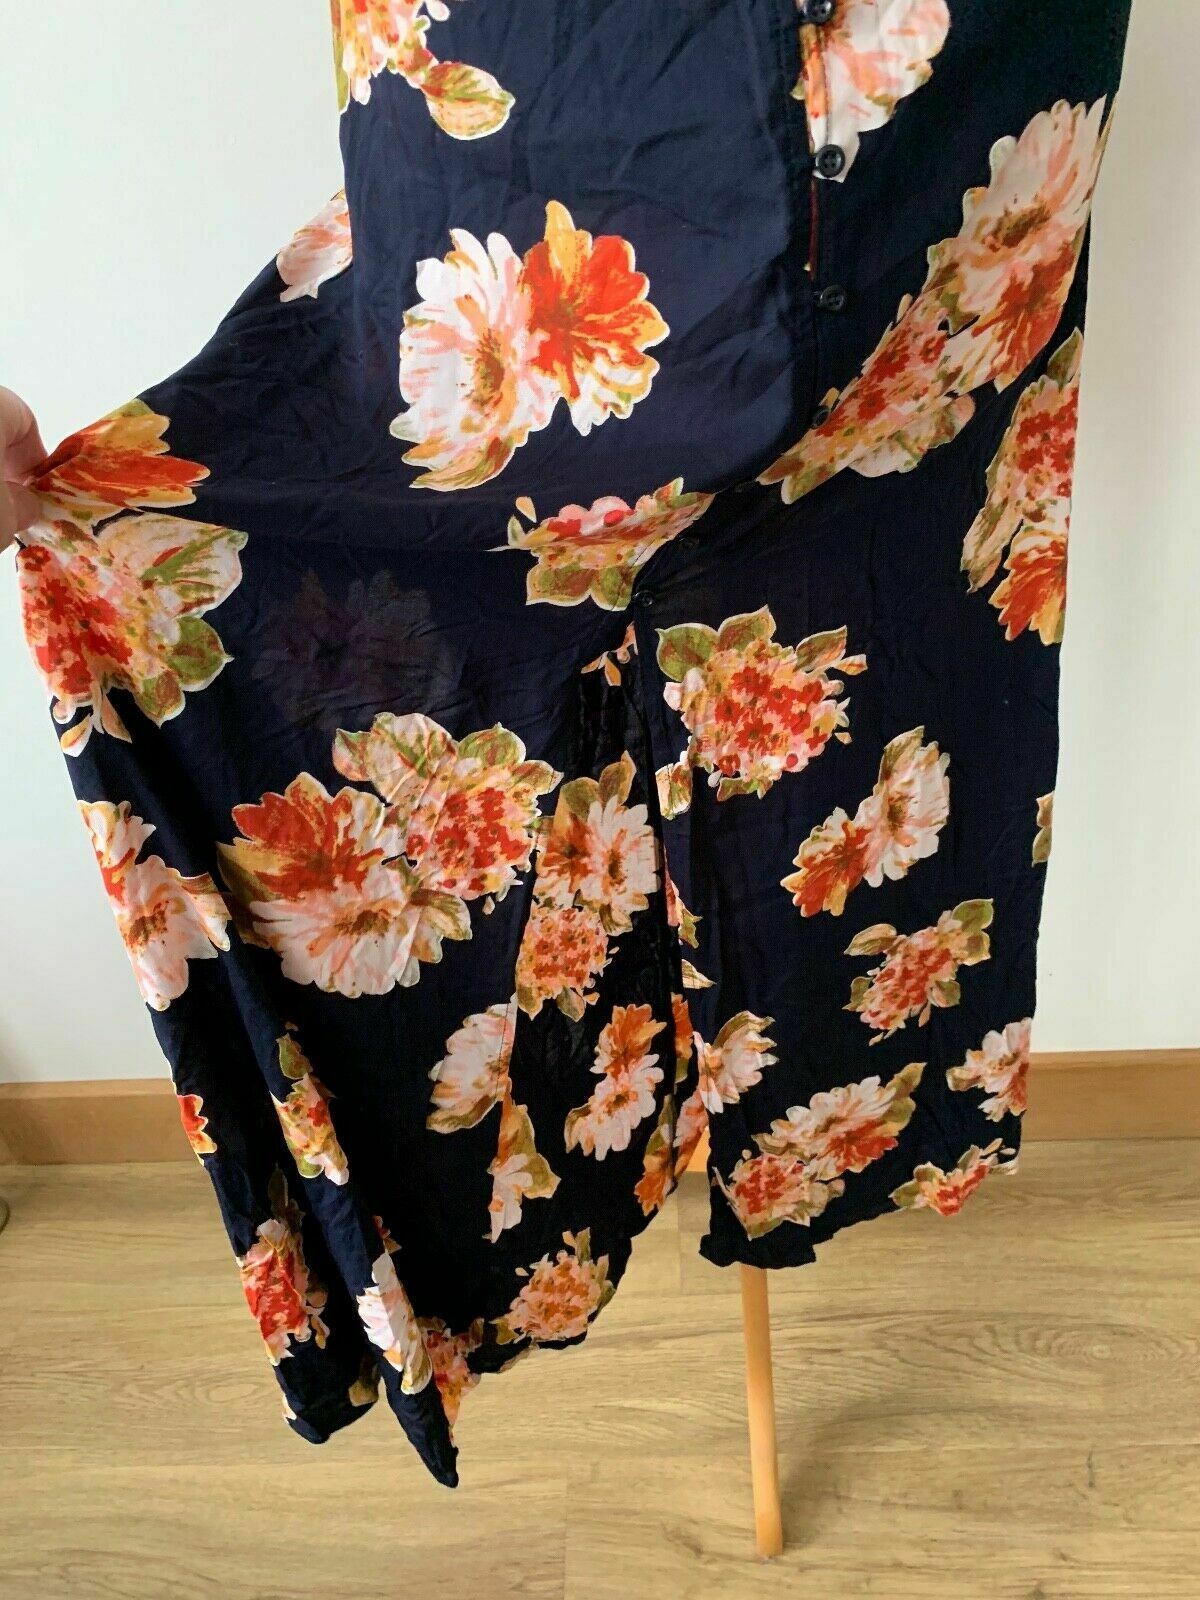 Brave Soul katrina maxi dress in large floral print Size S 8 Front Split